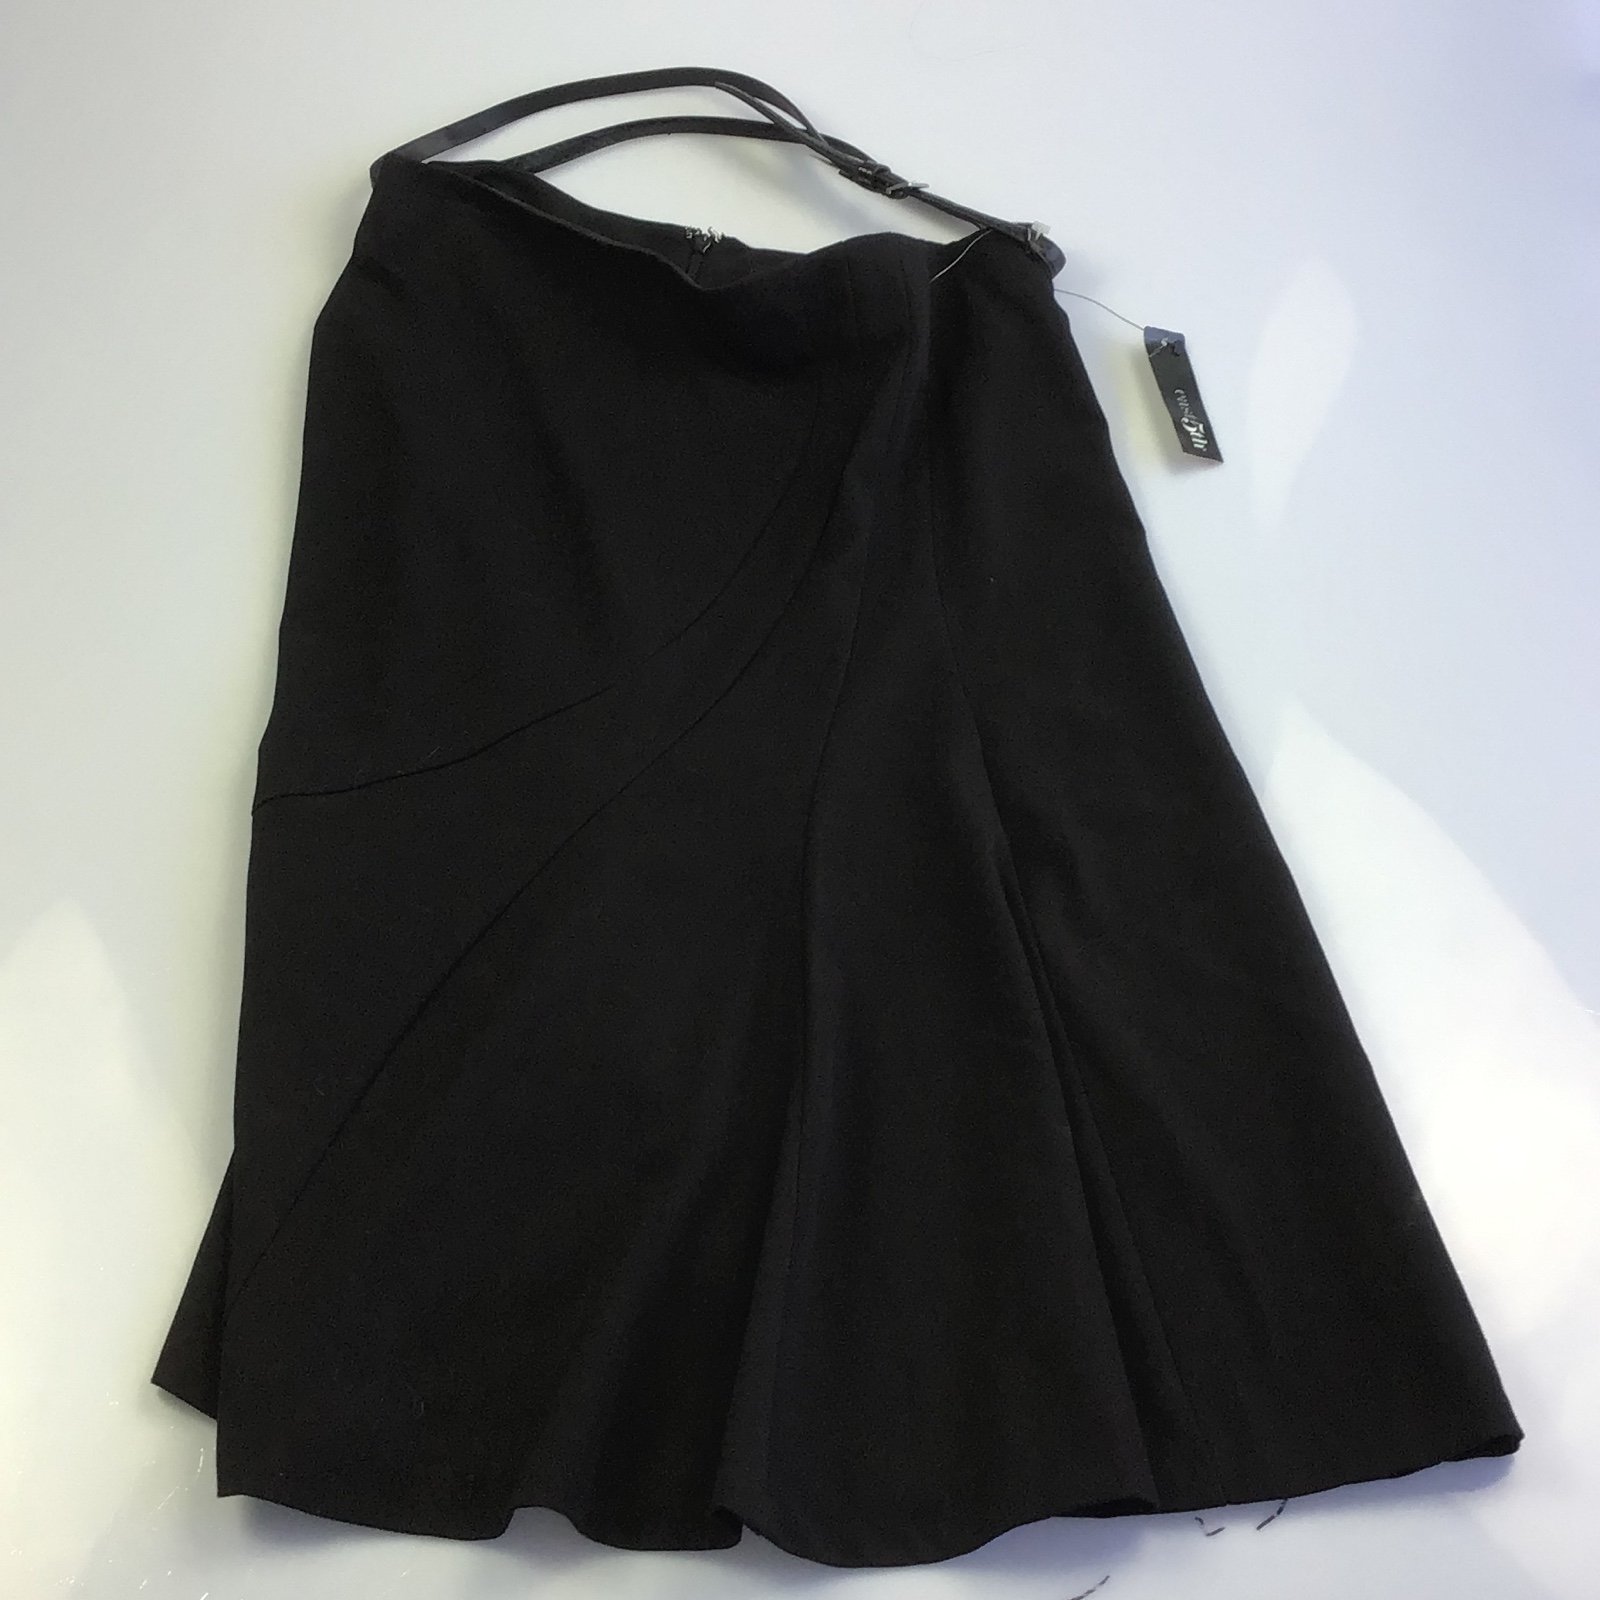 Fashion East 5th women’s skirt black size M kvTA10mk2 N